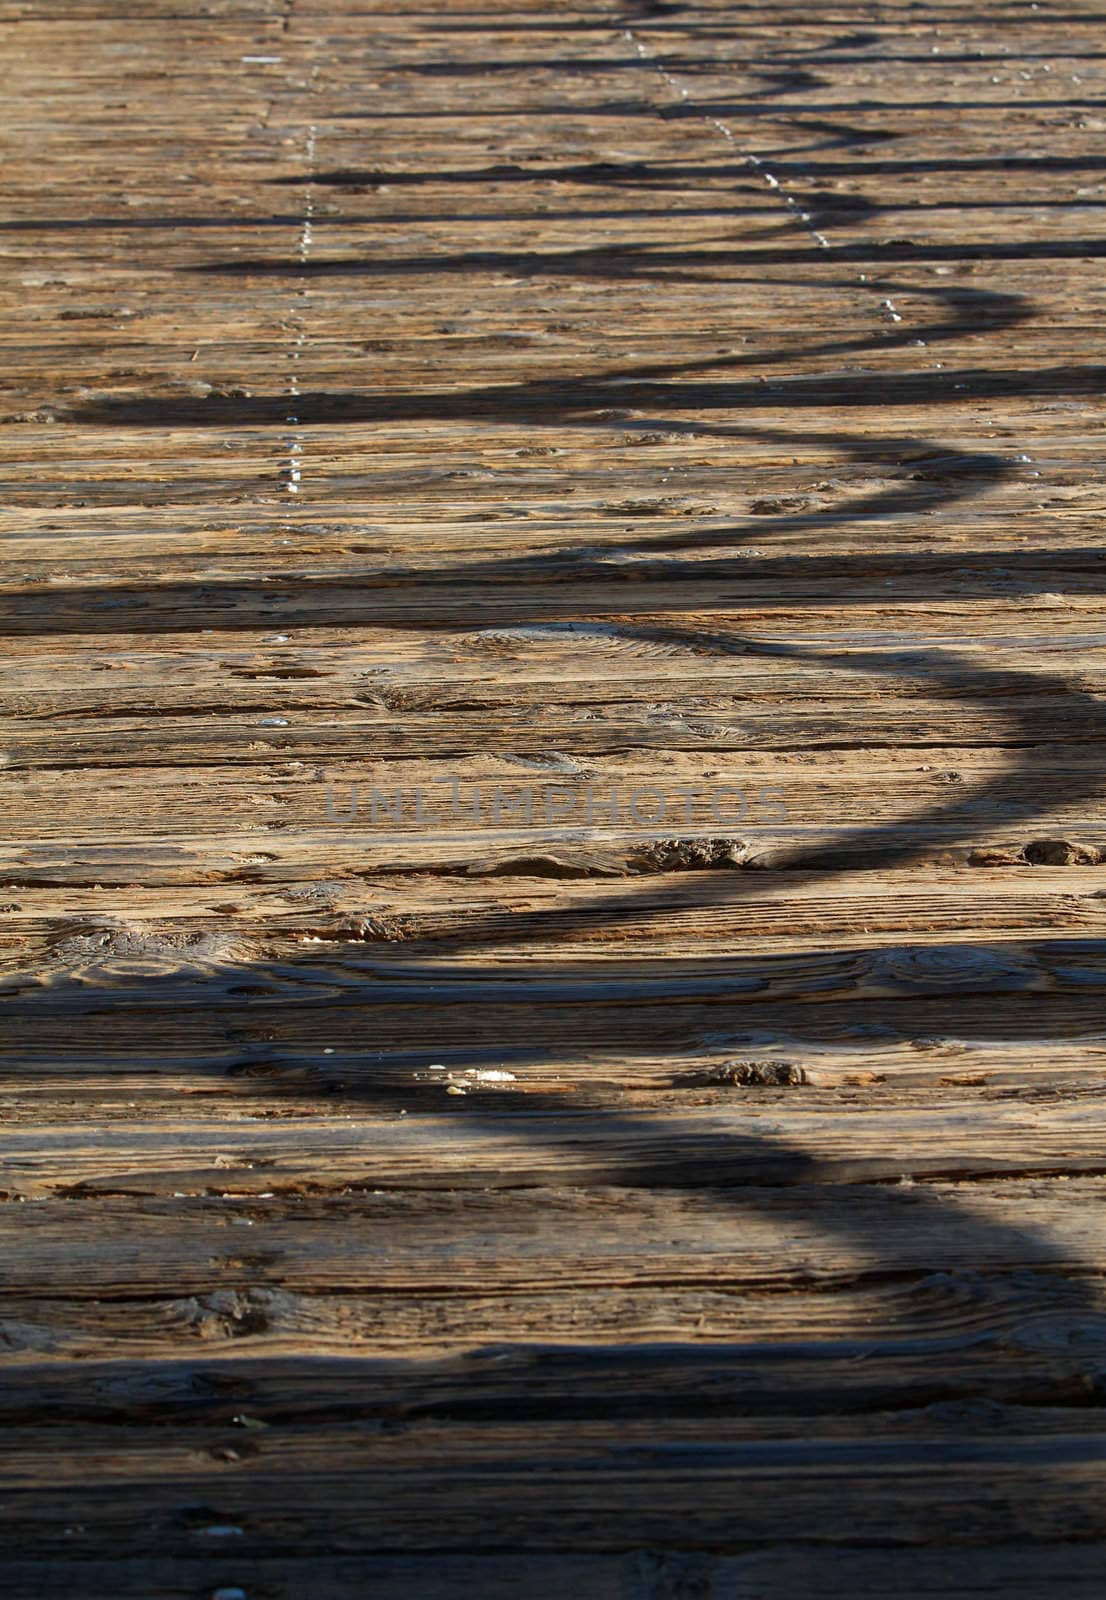 Boardwalk shadows by bobkeenan